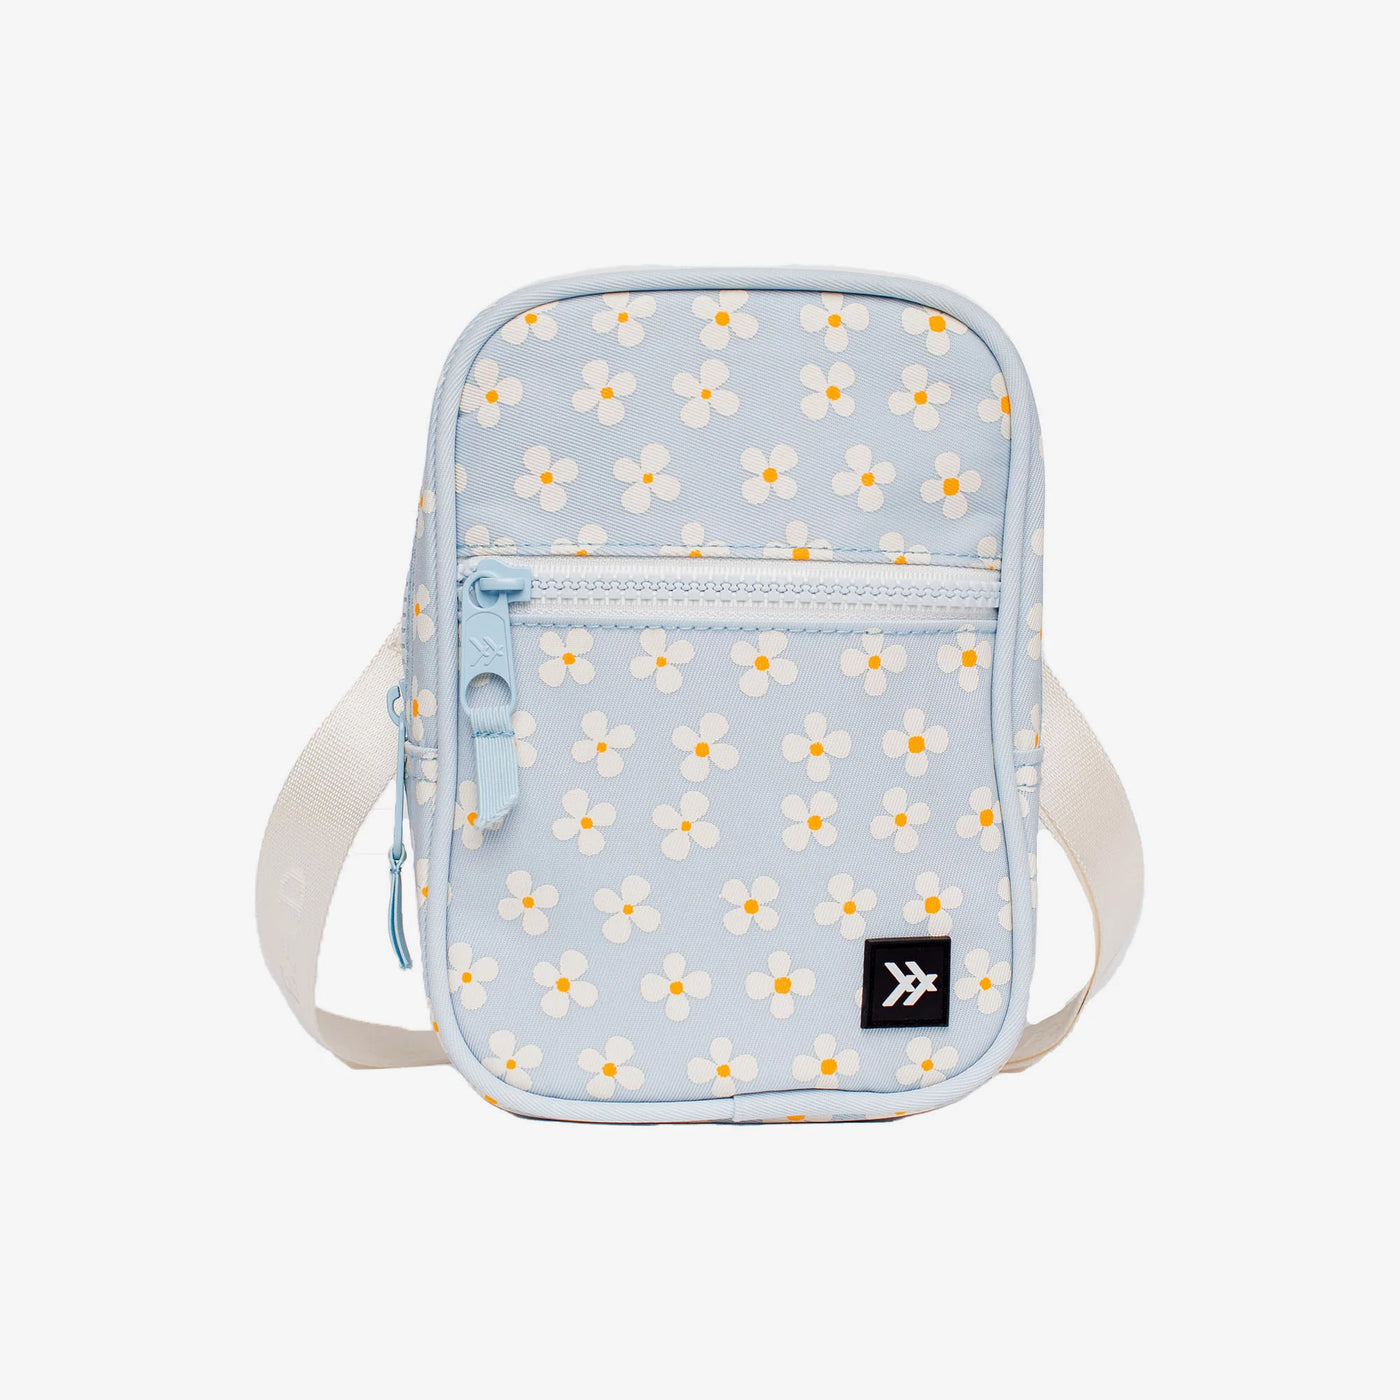 Luna Crossbody Bag